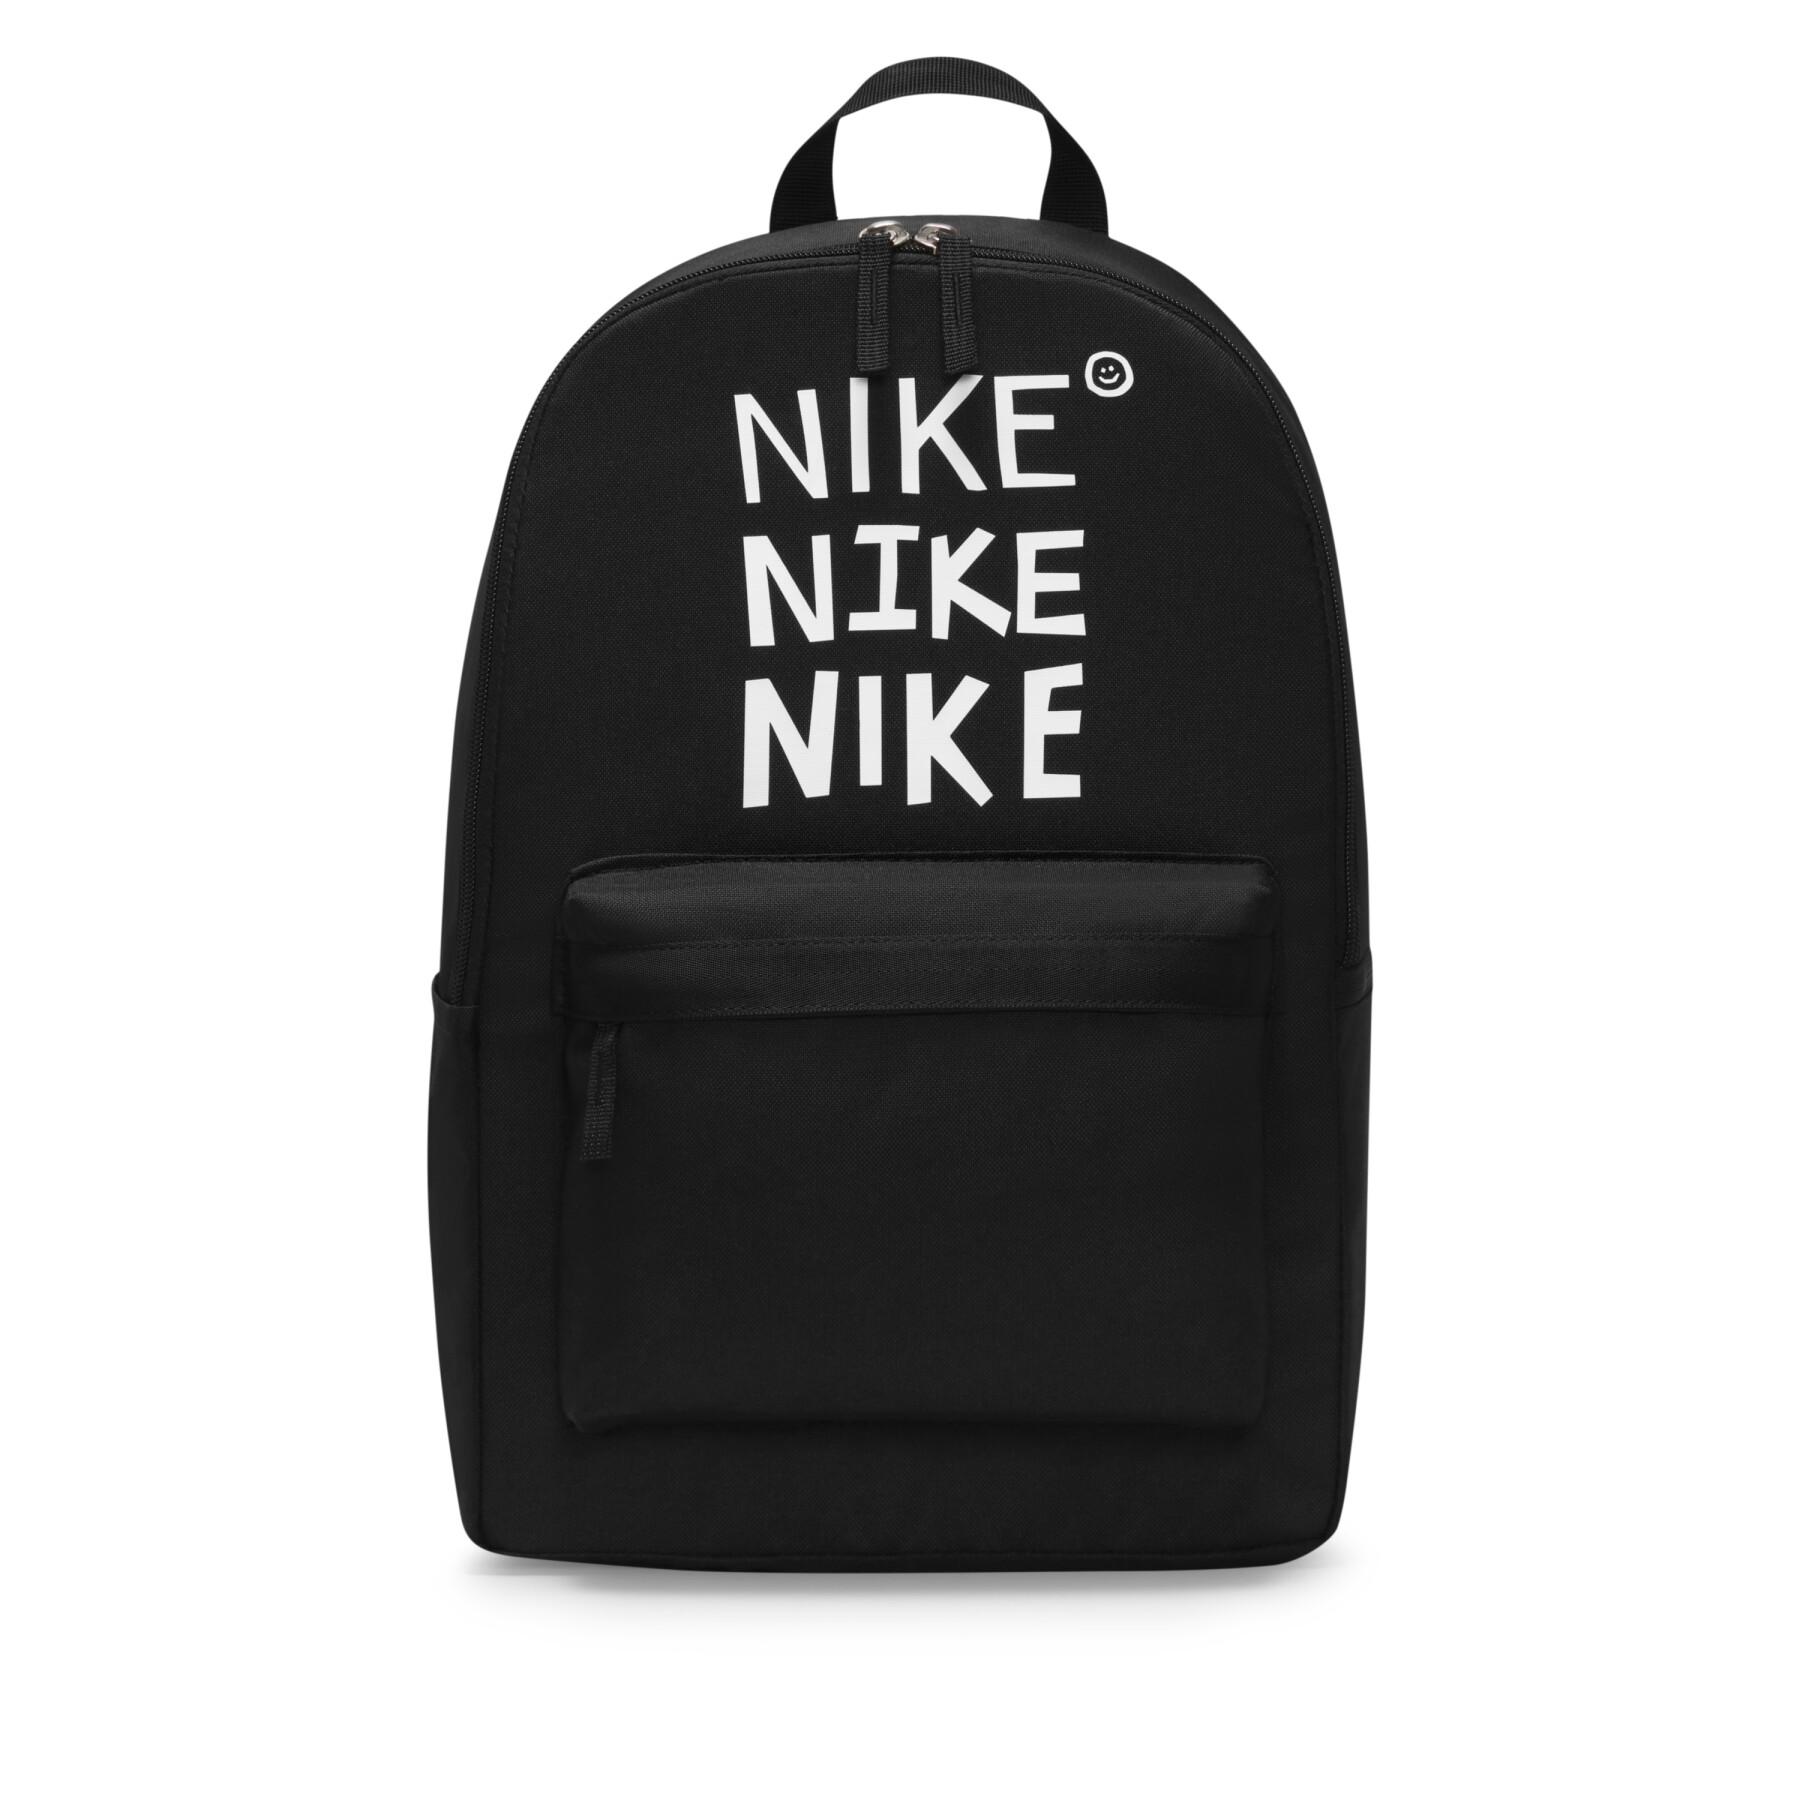 Backpack Nike Heritage 25L